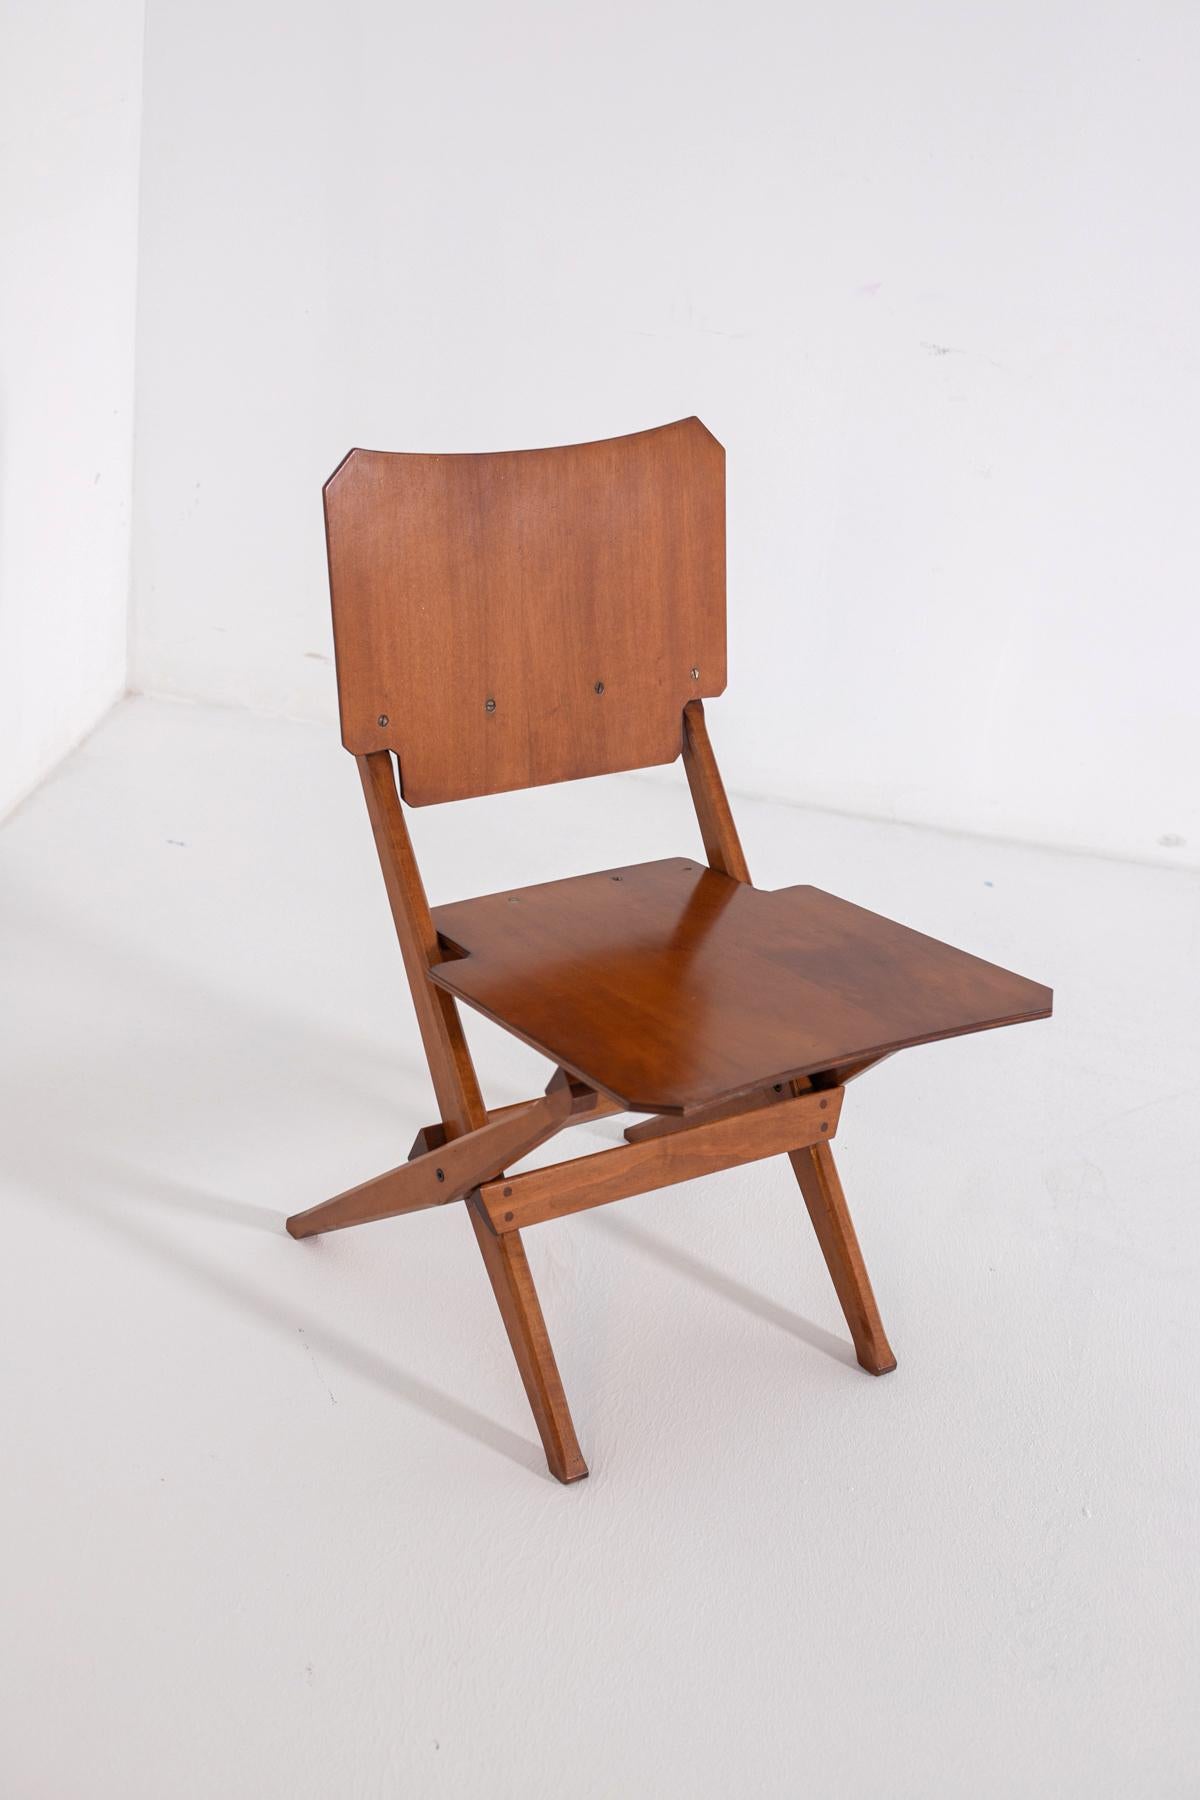 Italian Franco Albini Pair of Vintage Wooden Chairs for Poggi